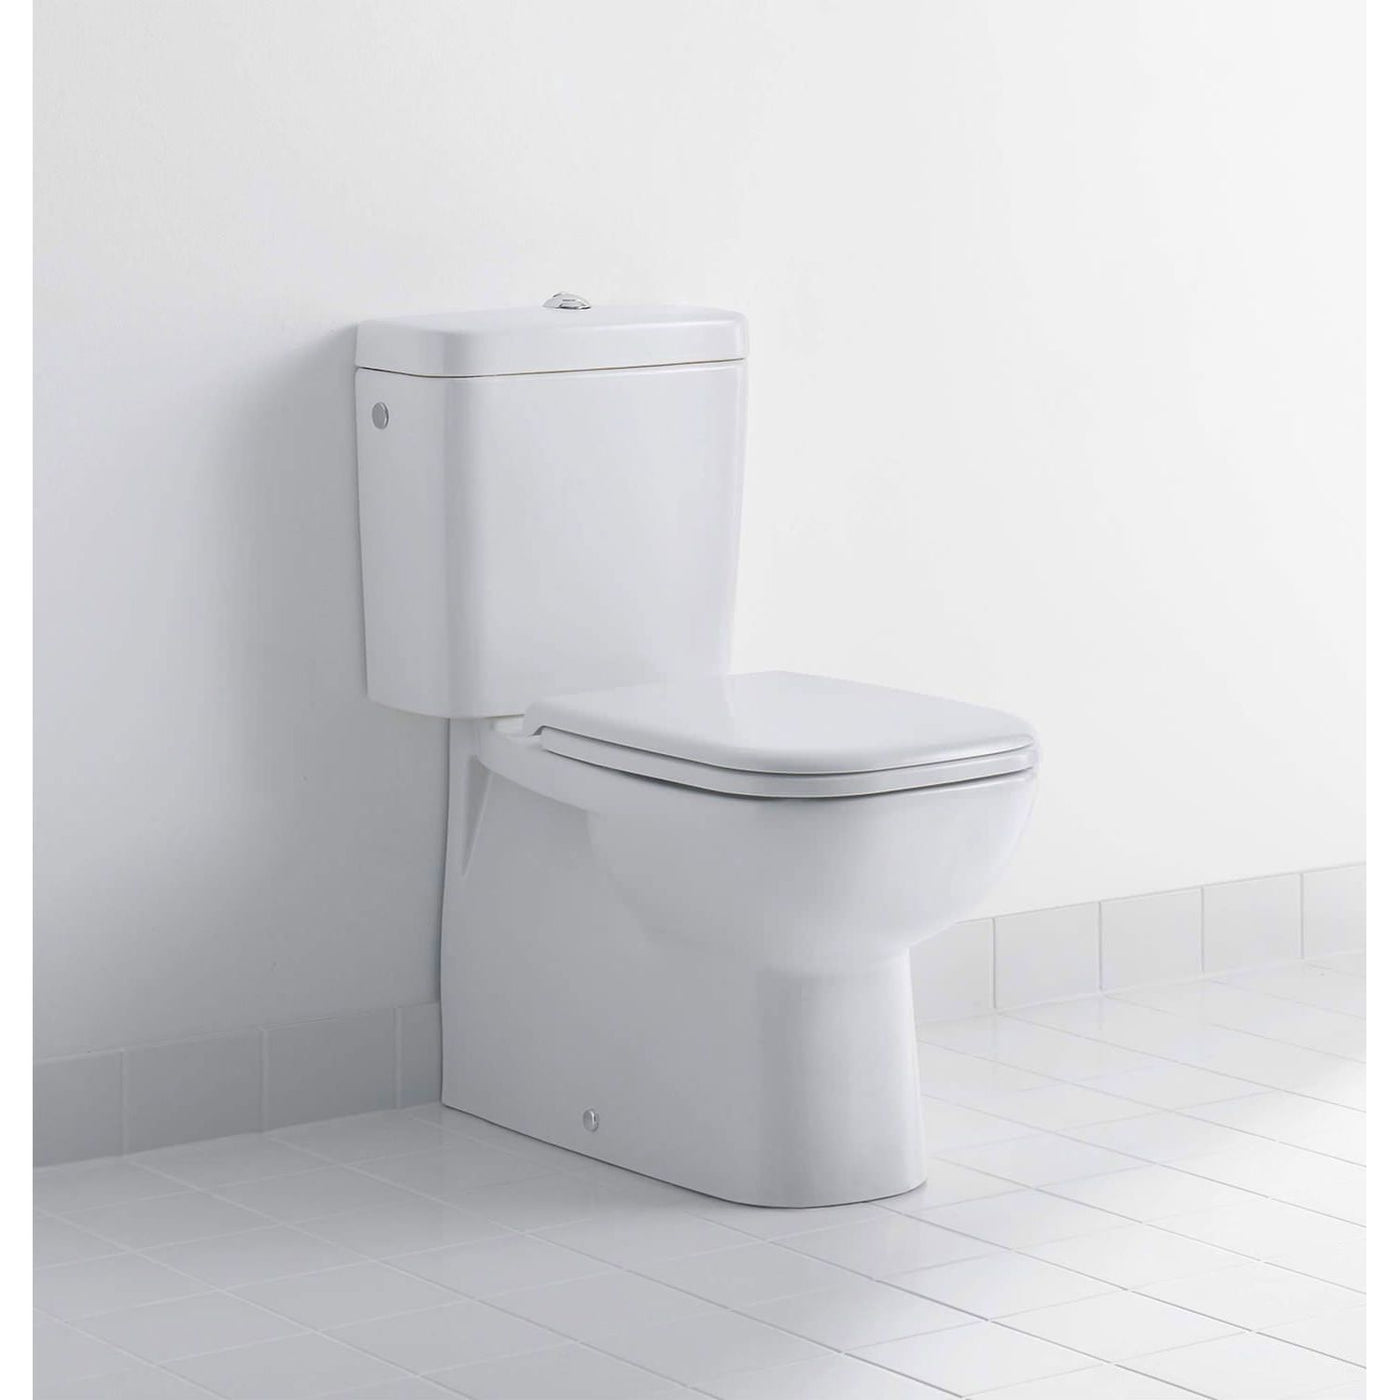 D-CODE Toilet "P" Trap 65Cm  White (Bowl Only),Sanitarywares,DURAVIT,Haji Gallery.